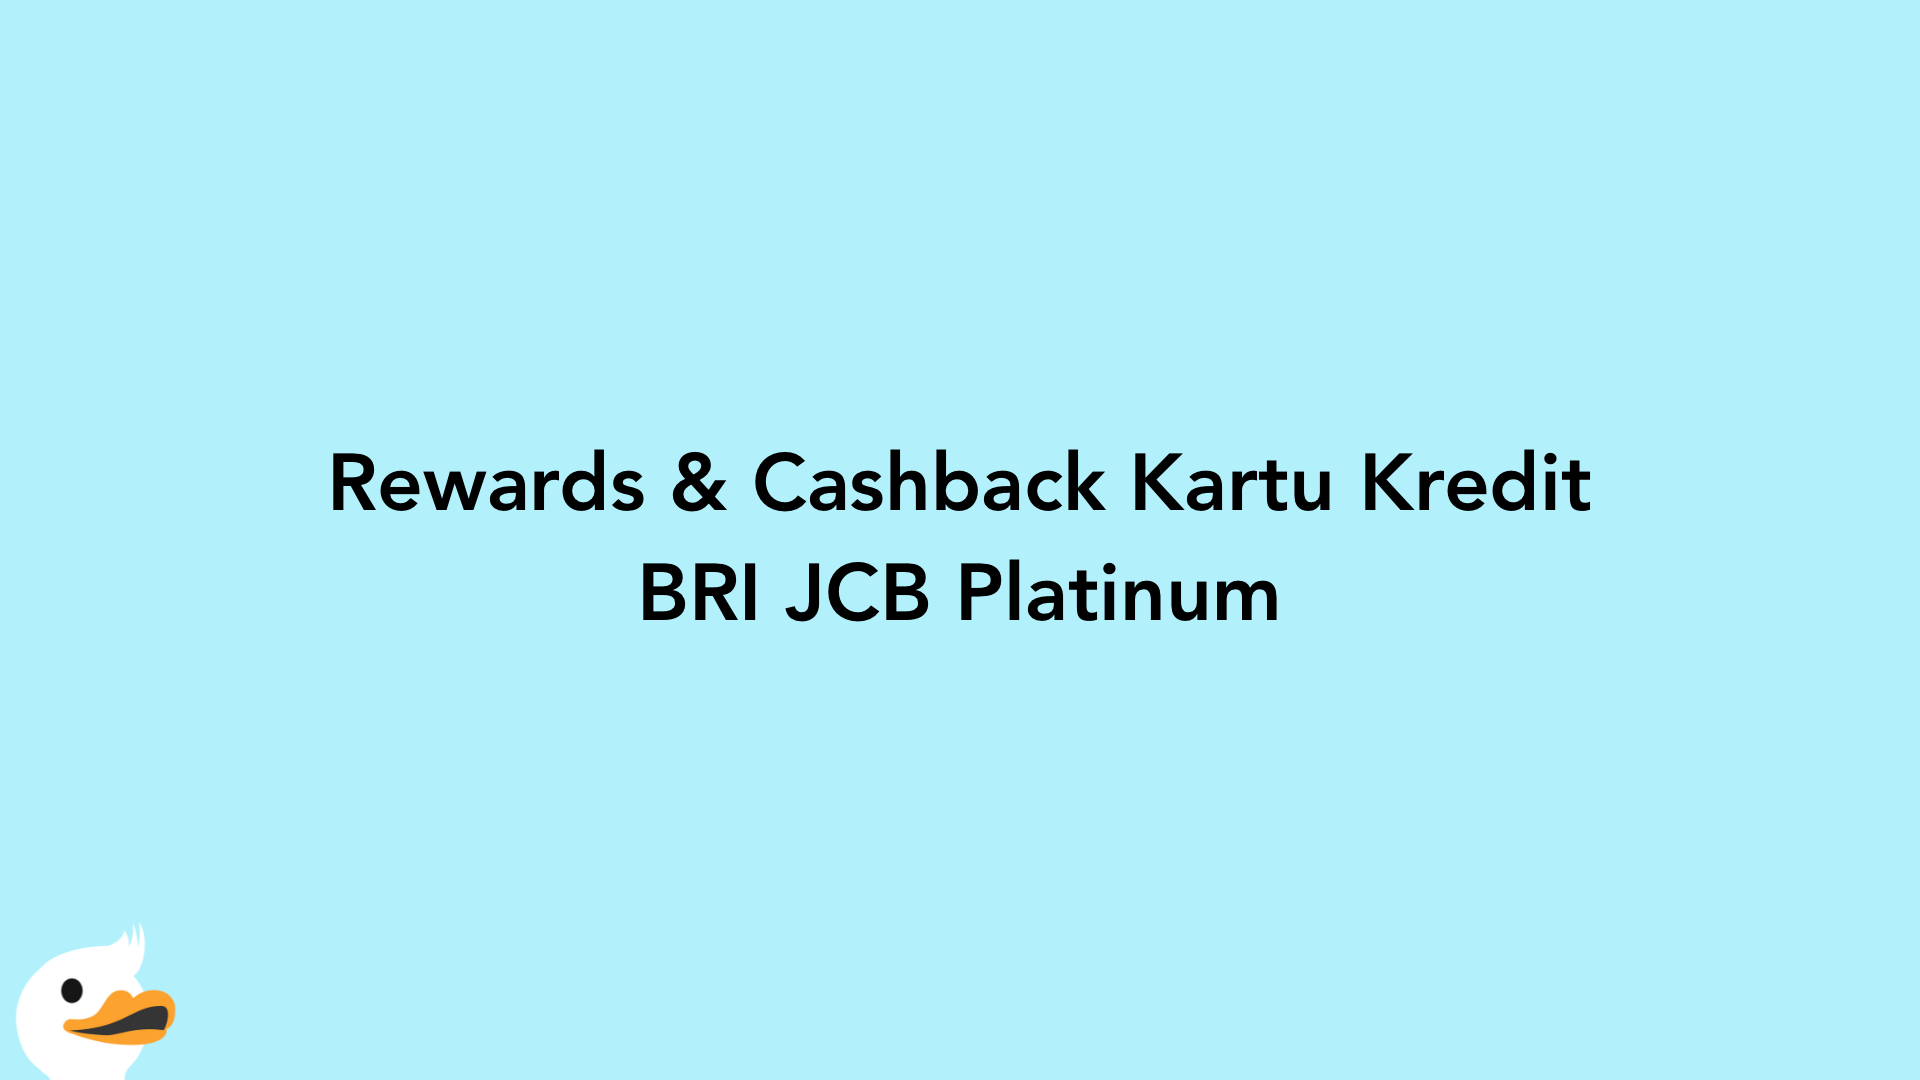 Rewards & Cashback Kartu Kredit BRI JCB Platinum